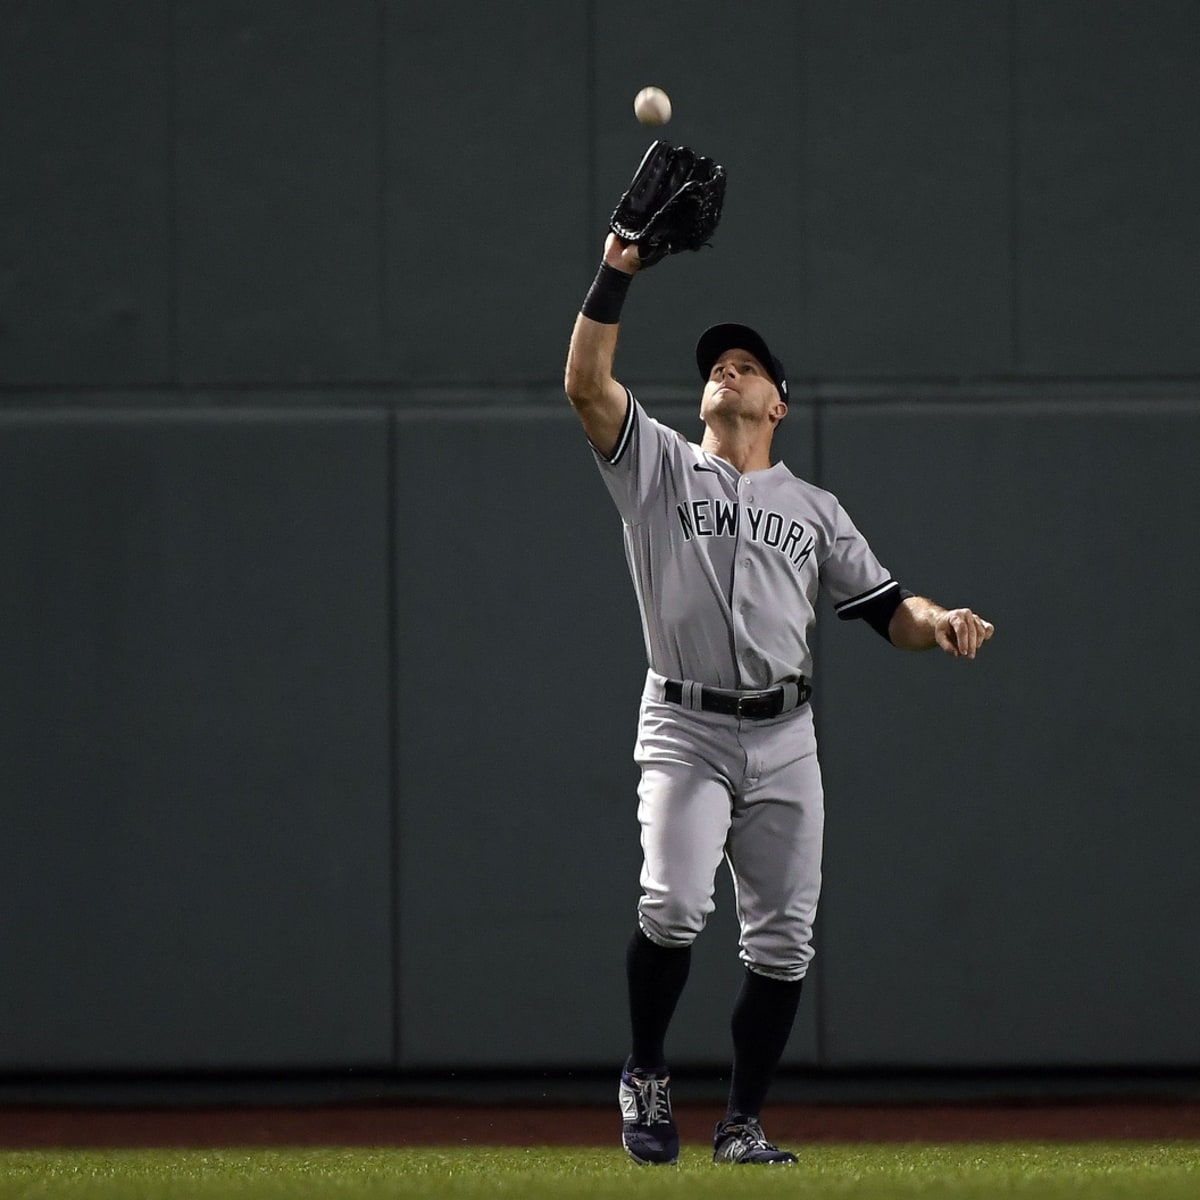 PHOTO GALLERY: Yankees outfielder Brett Gardner visits MUSC